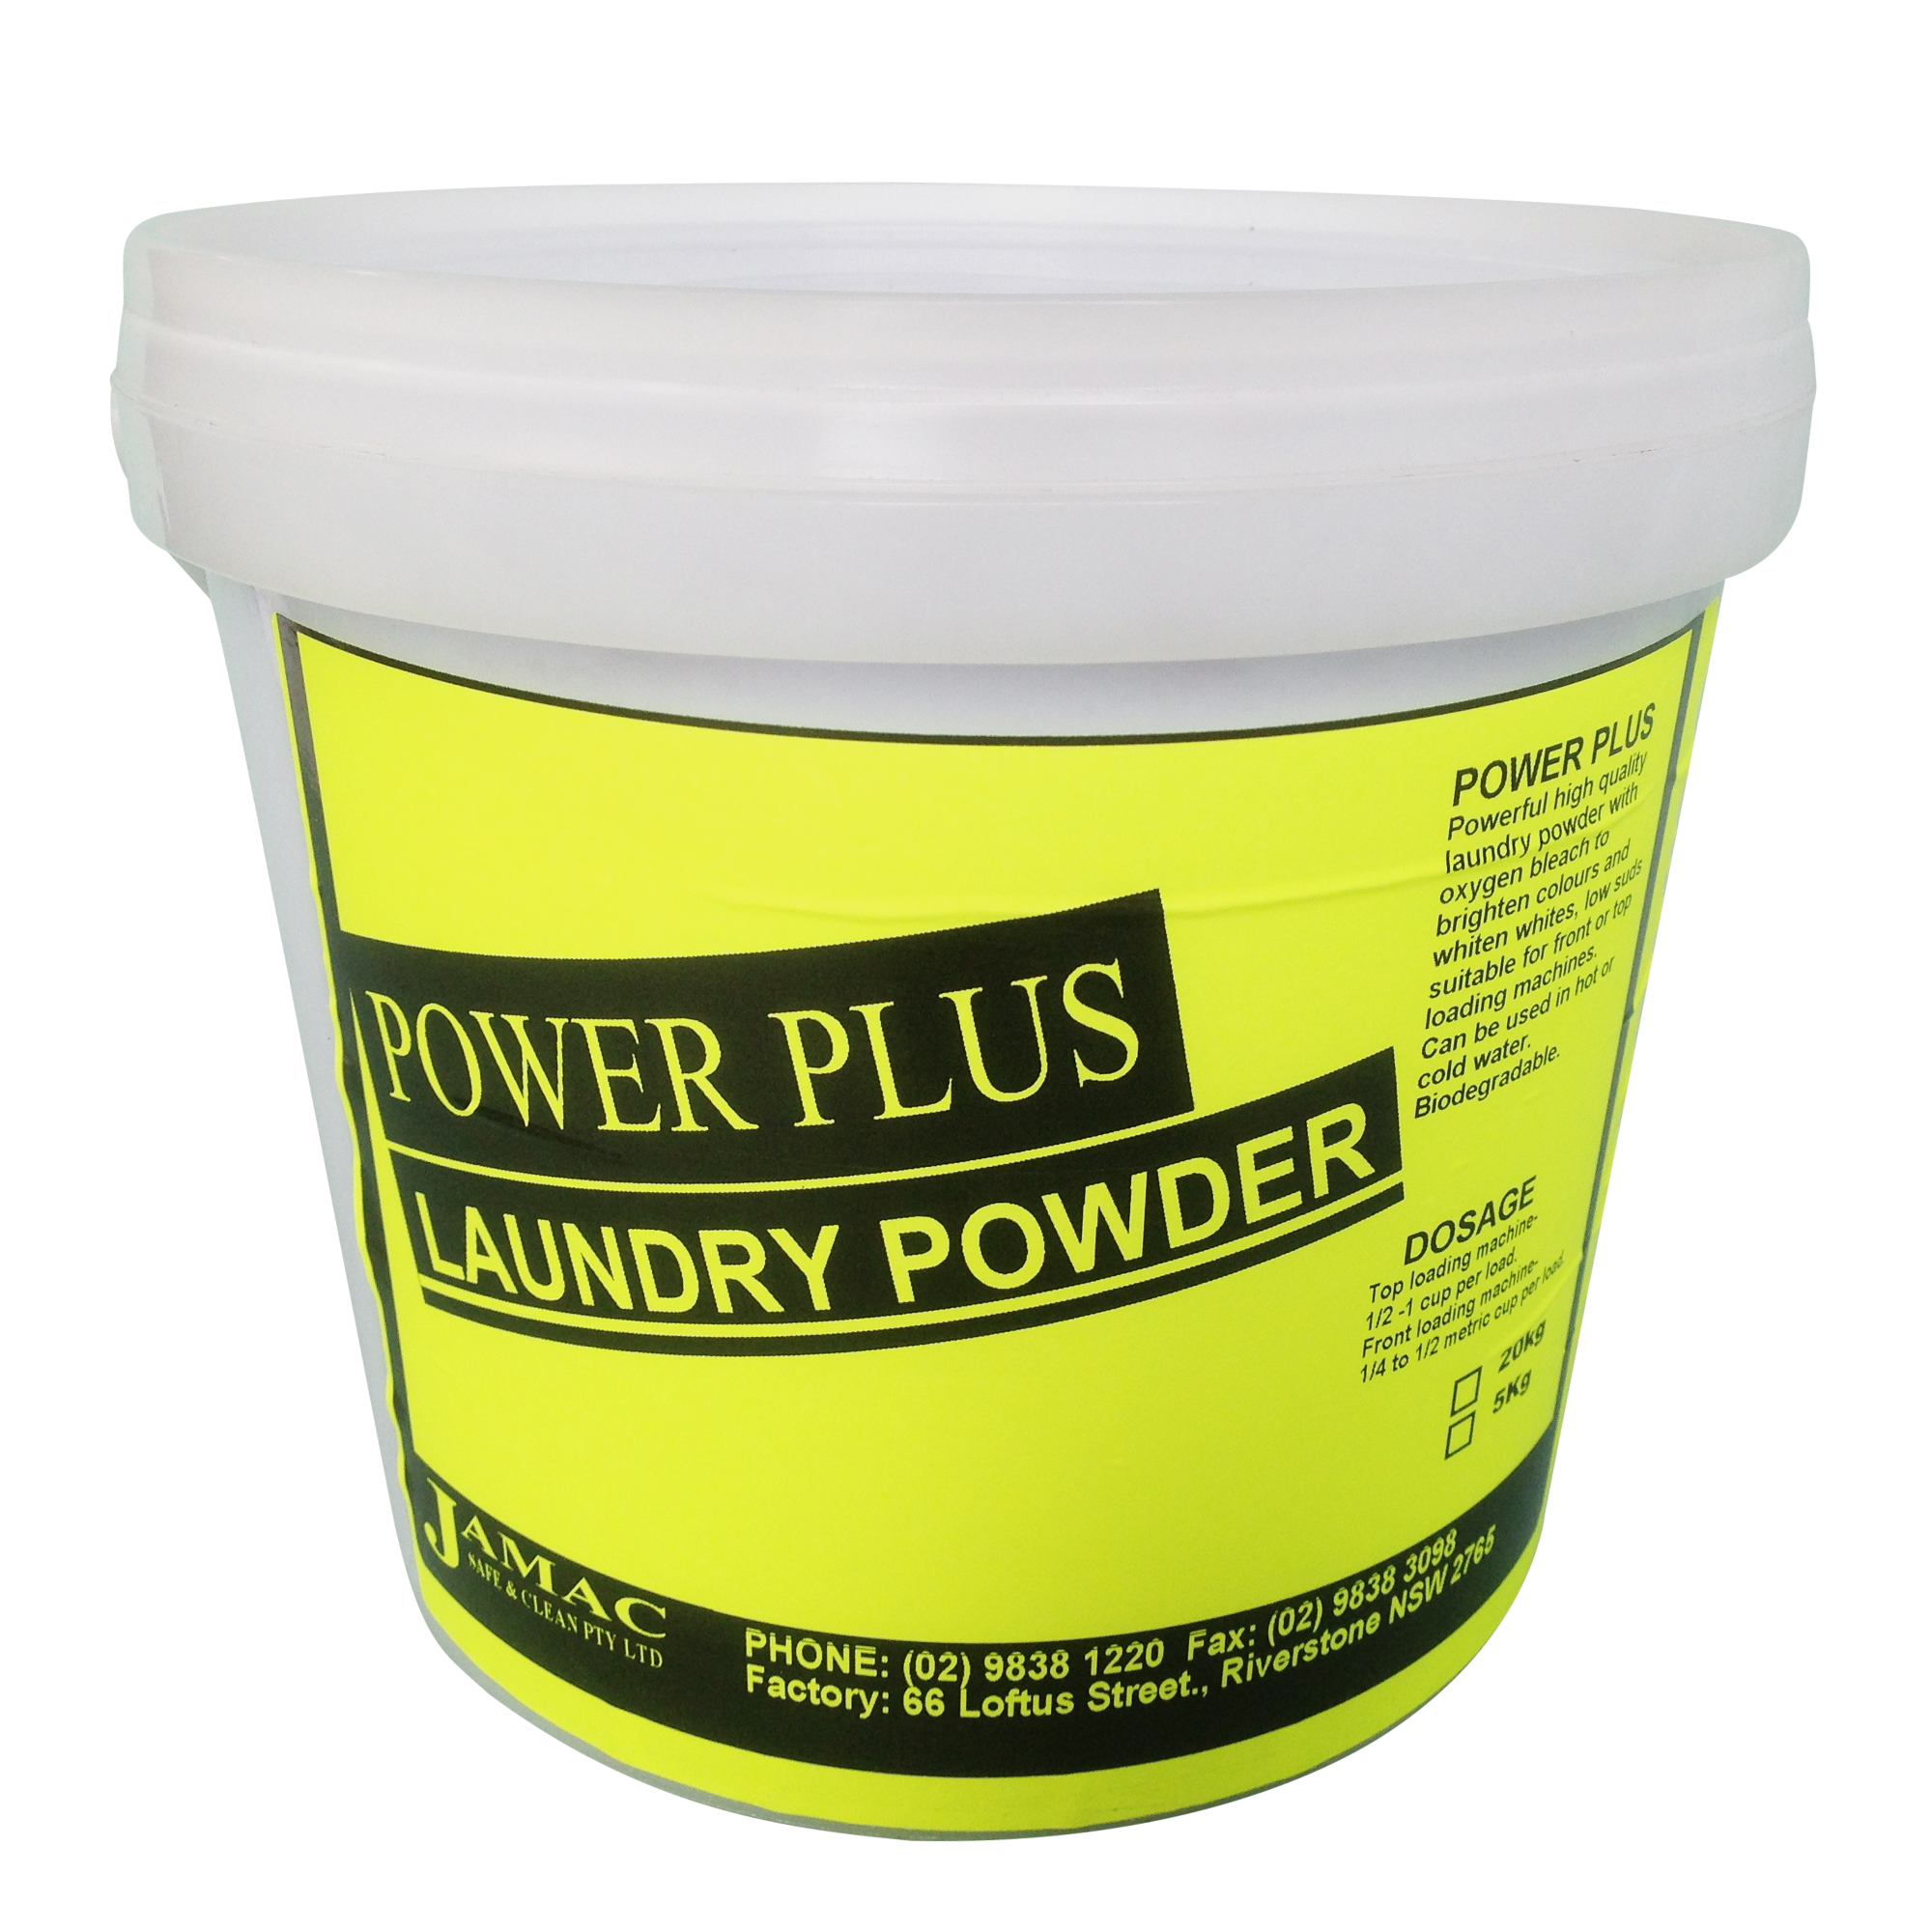 POWER PLUS Laundry Powder